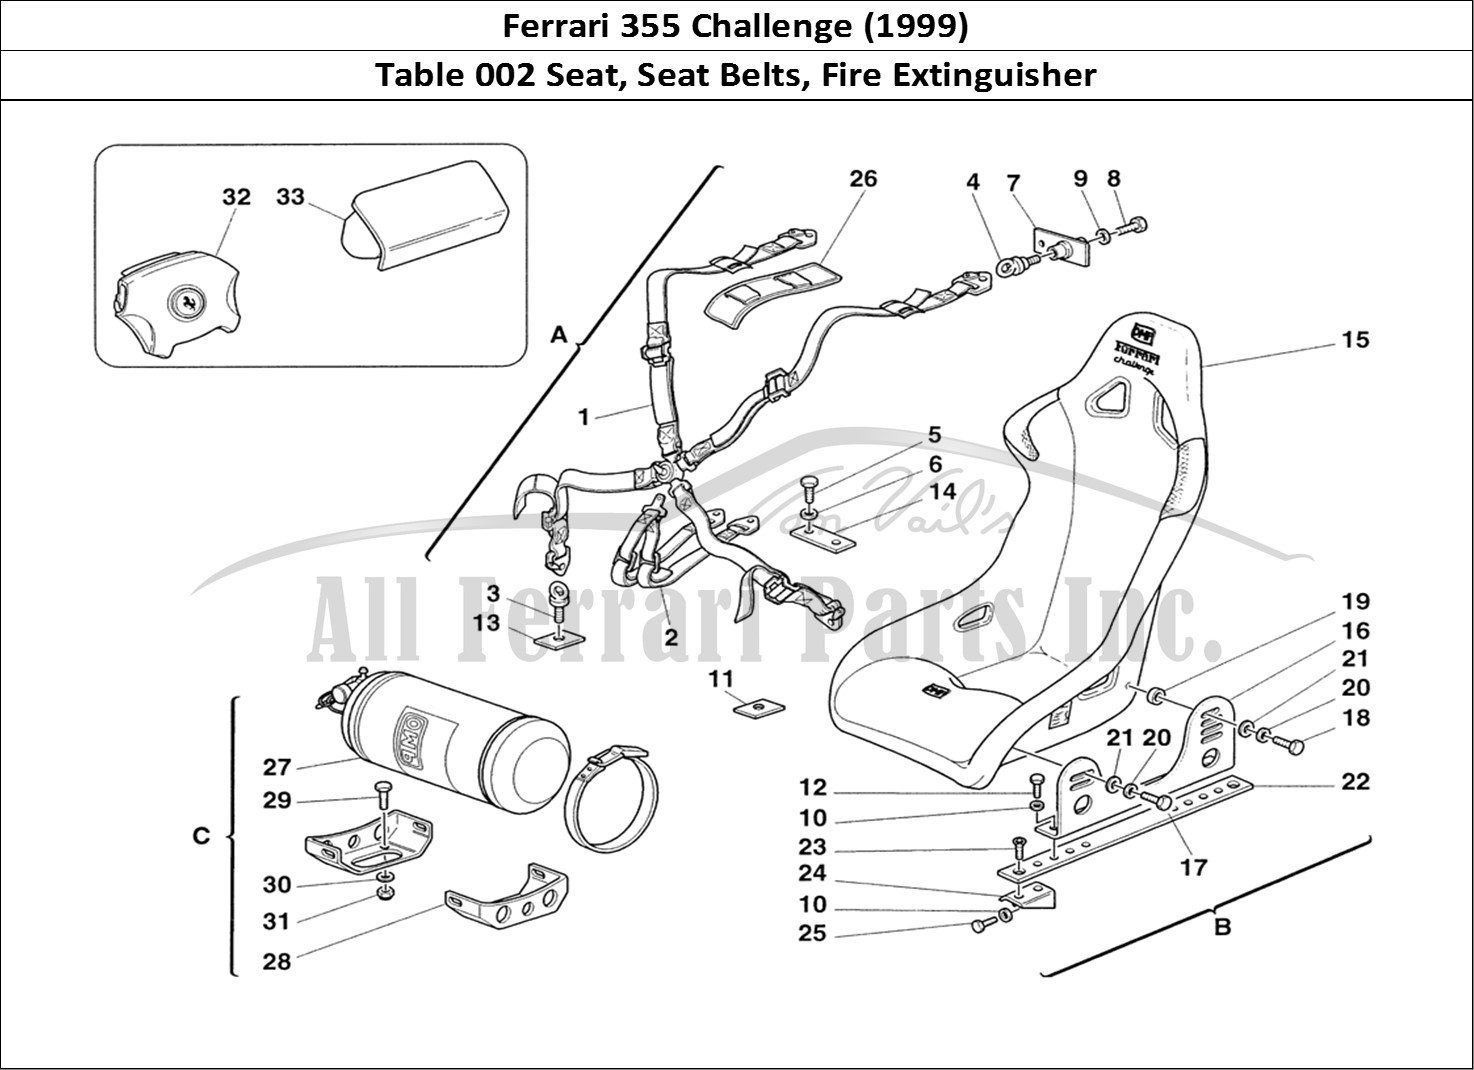 Ferrari Parts Ferrari 355 Challenge (1999) Page 002 Seat Safety Belts - Seat